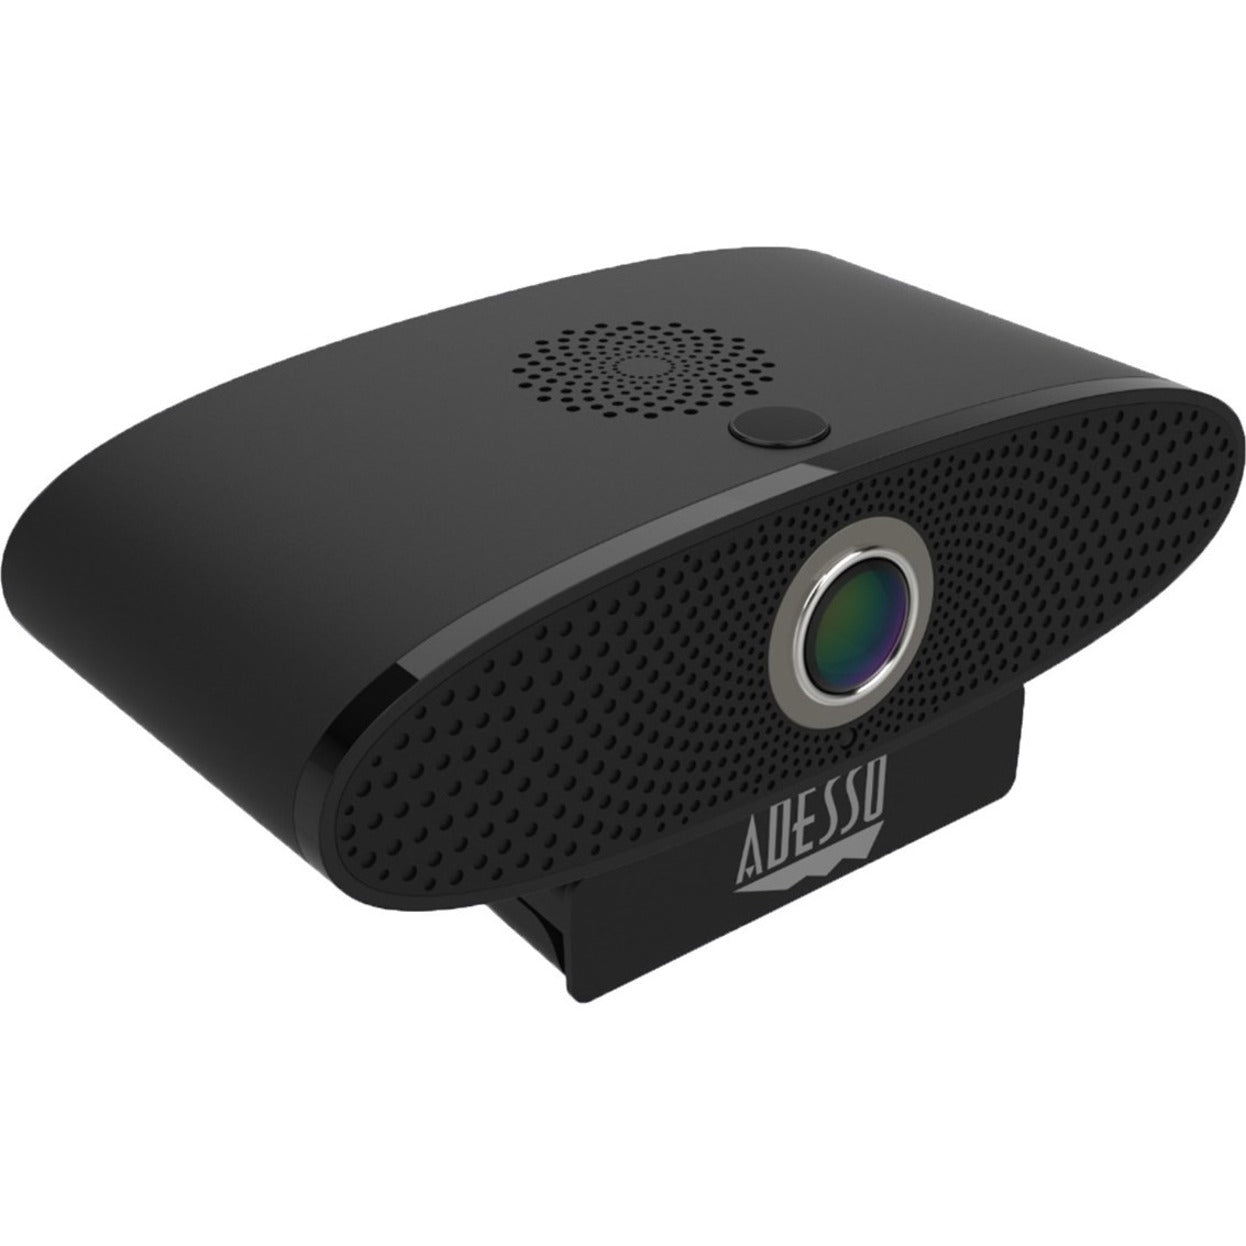 Adesso Cybertrack C100 CyberTrack C100 Webcam, 8 Megapixel, 30 fps, USB 2.0